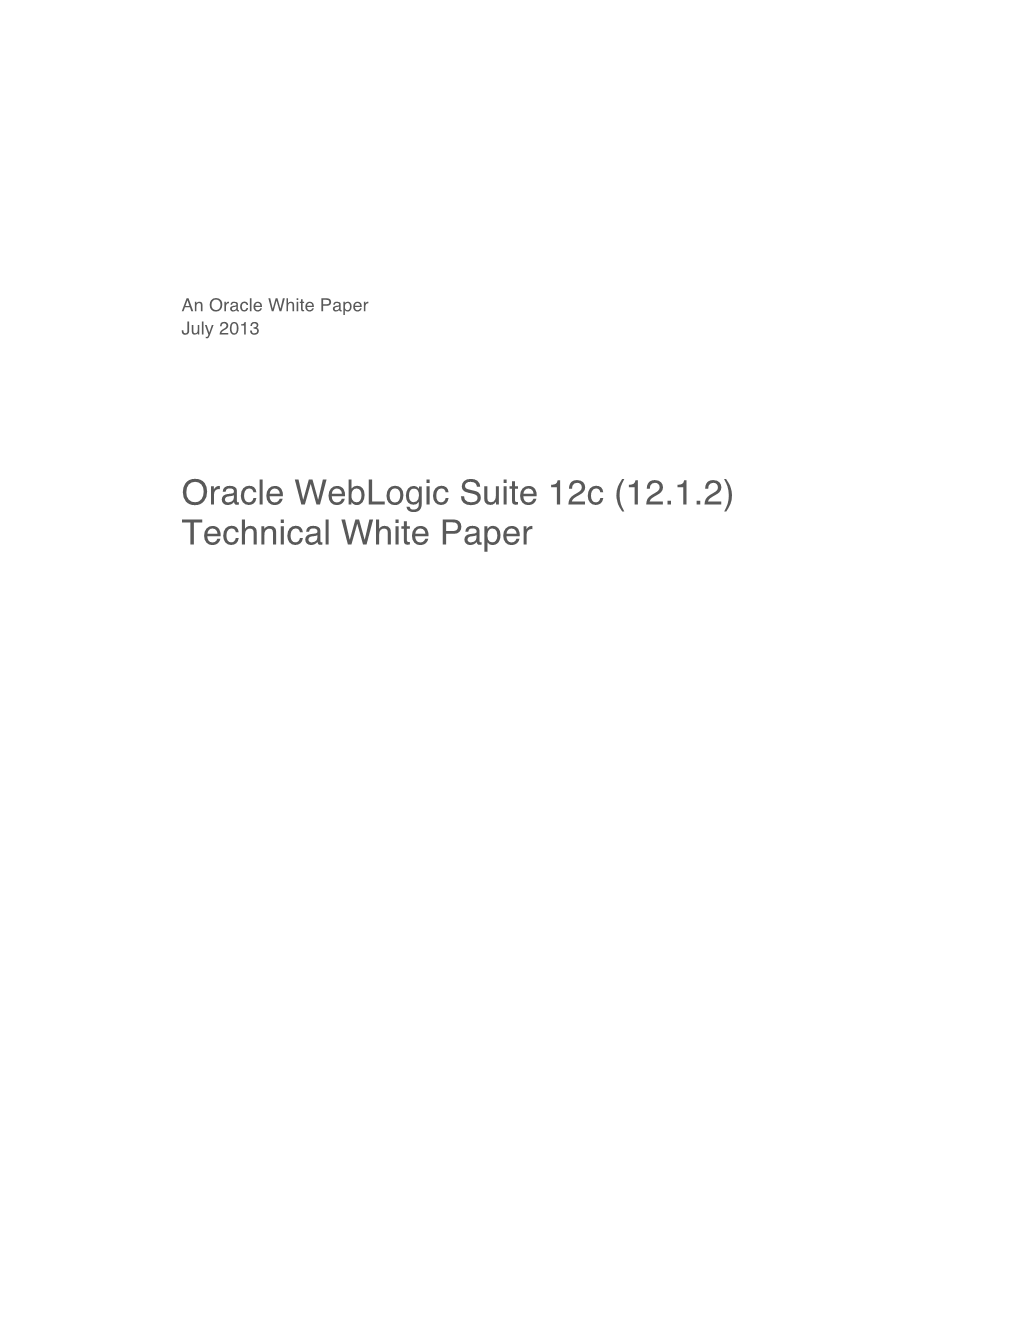 New Weblogic Server 12C (Release 12.1.2)